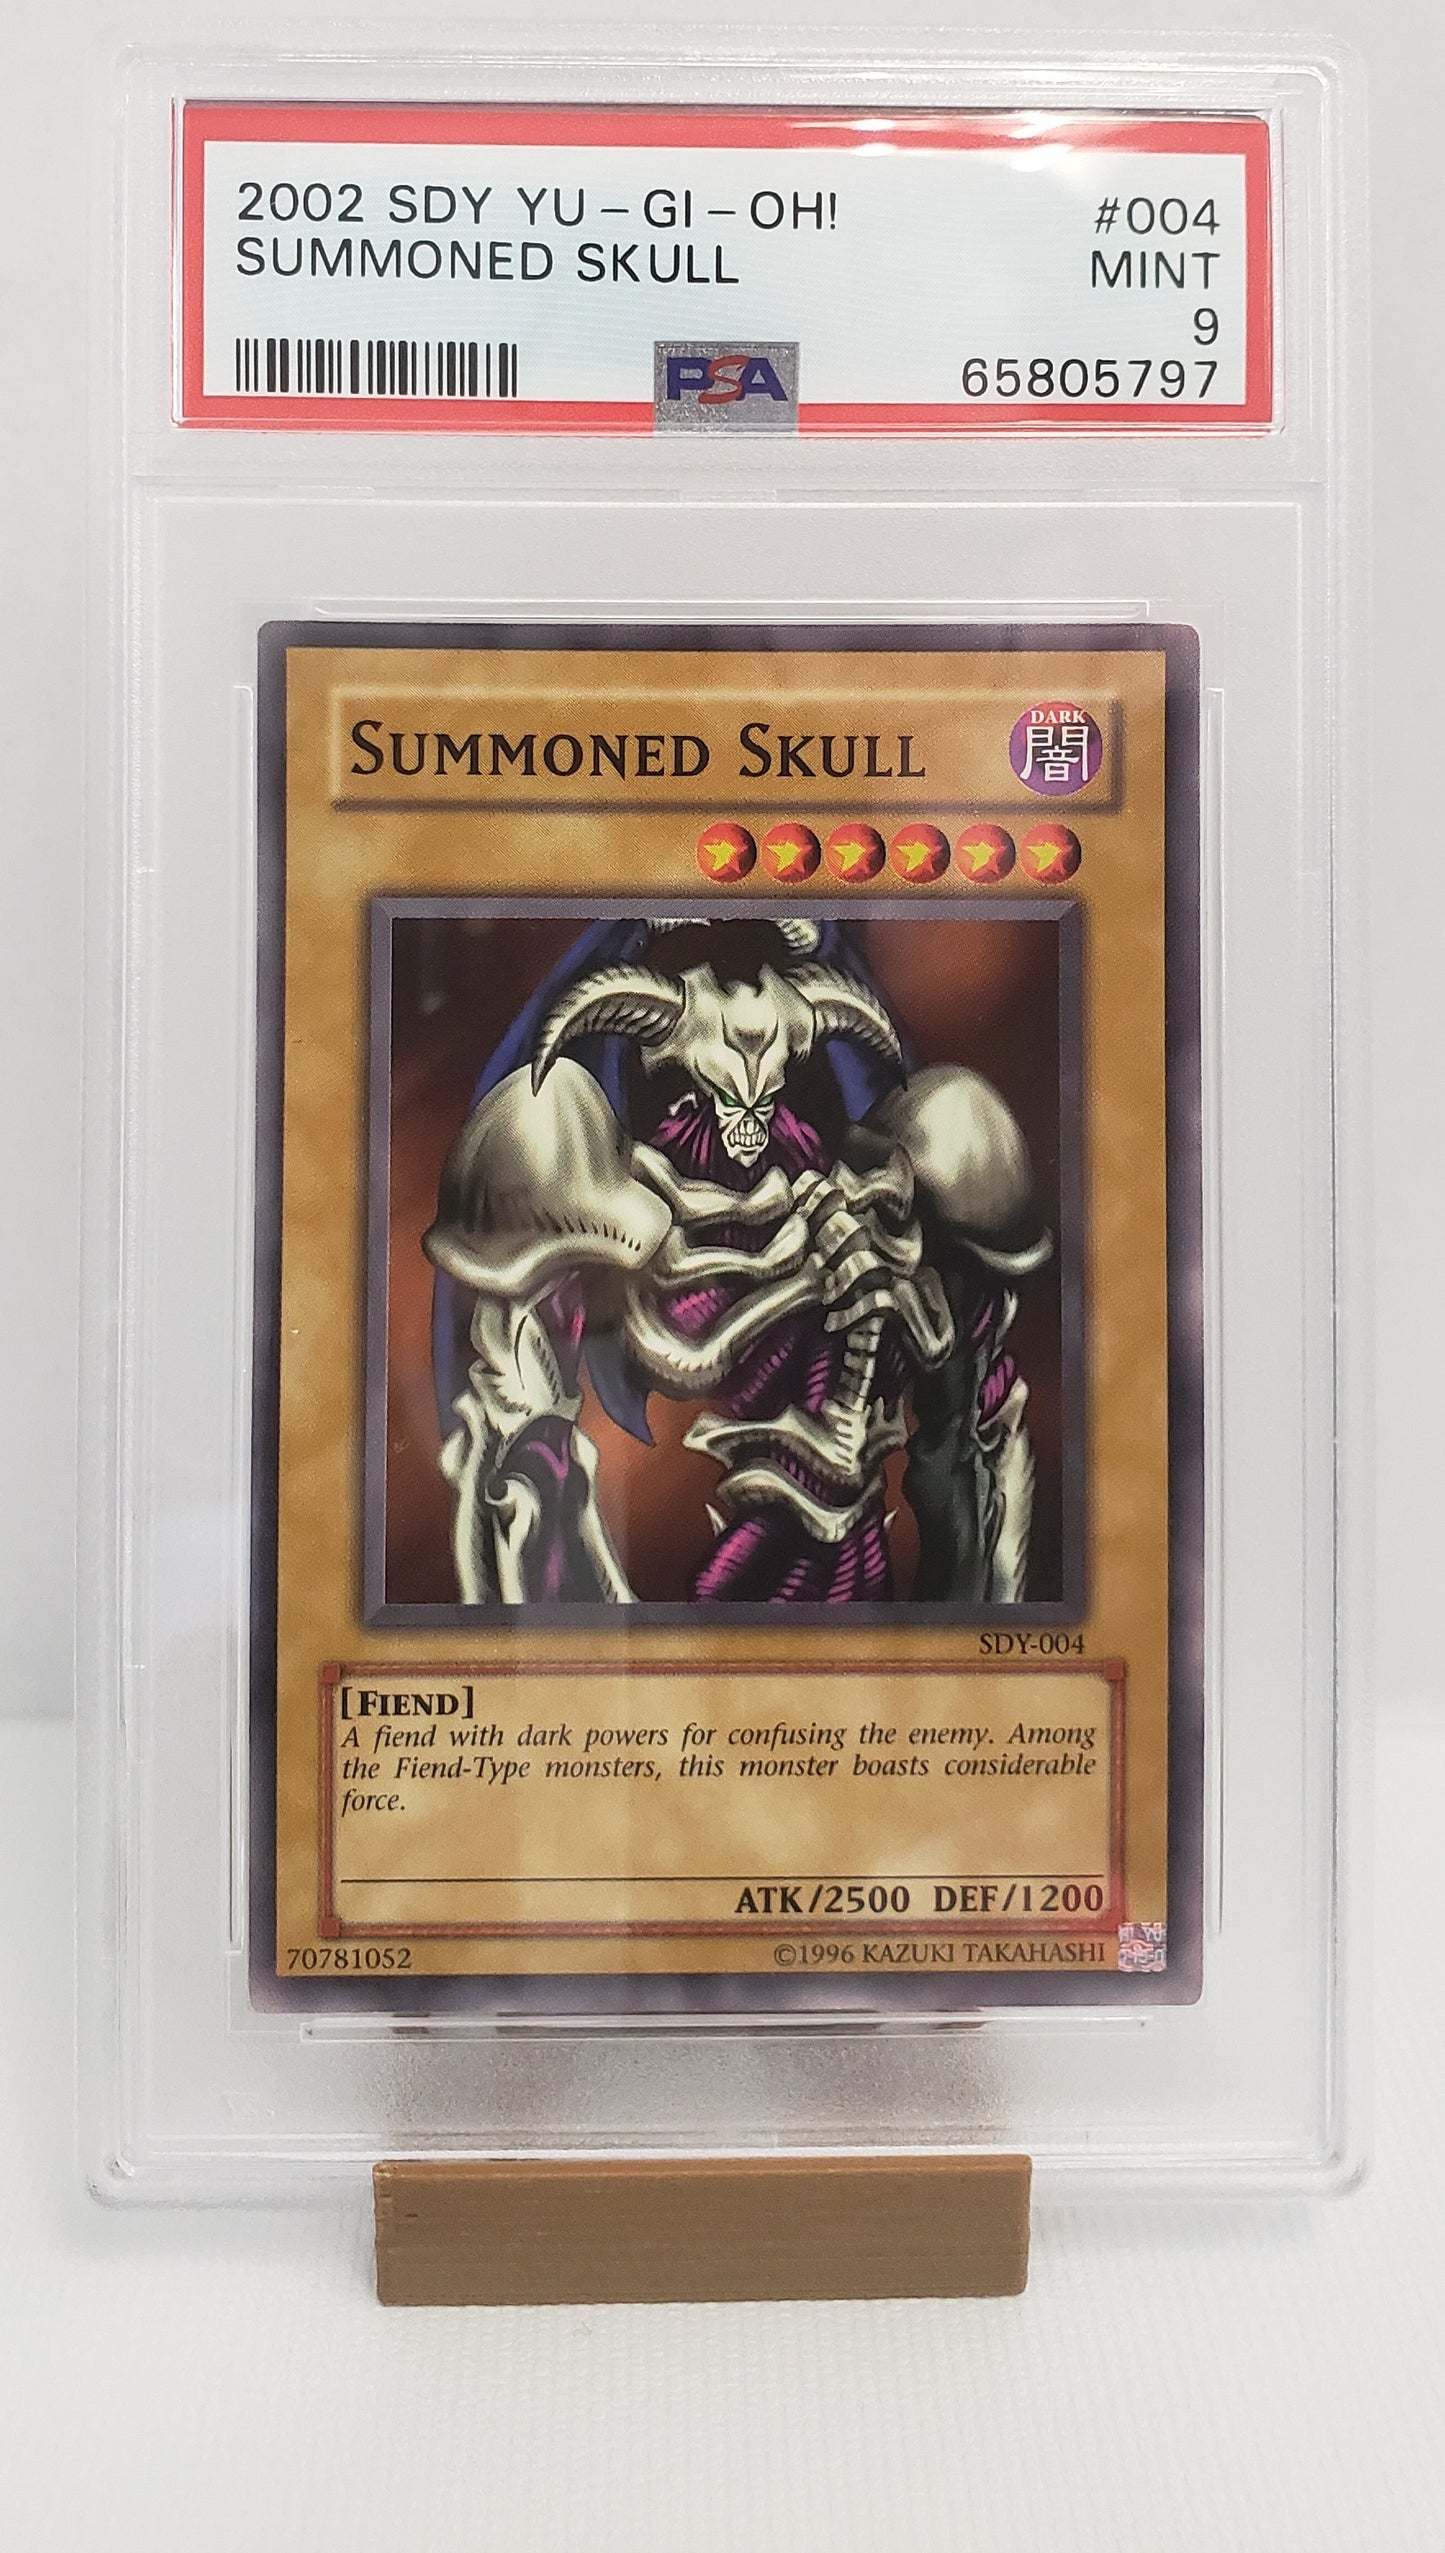 Summoned Skull (SDY-004) PSA 9